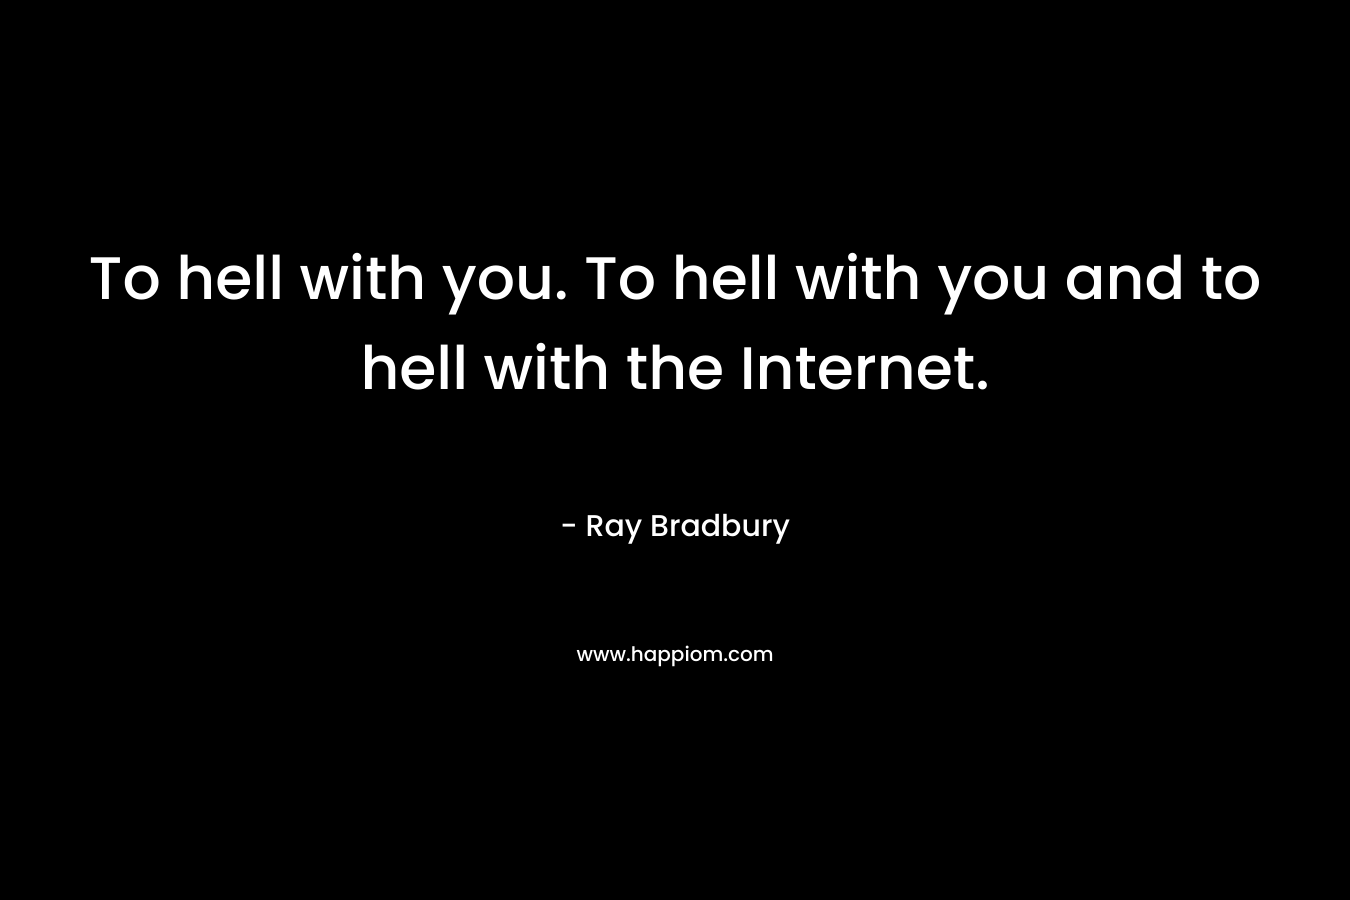 To hell with you. To hell with you and to hell with the Internet.